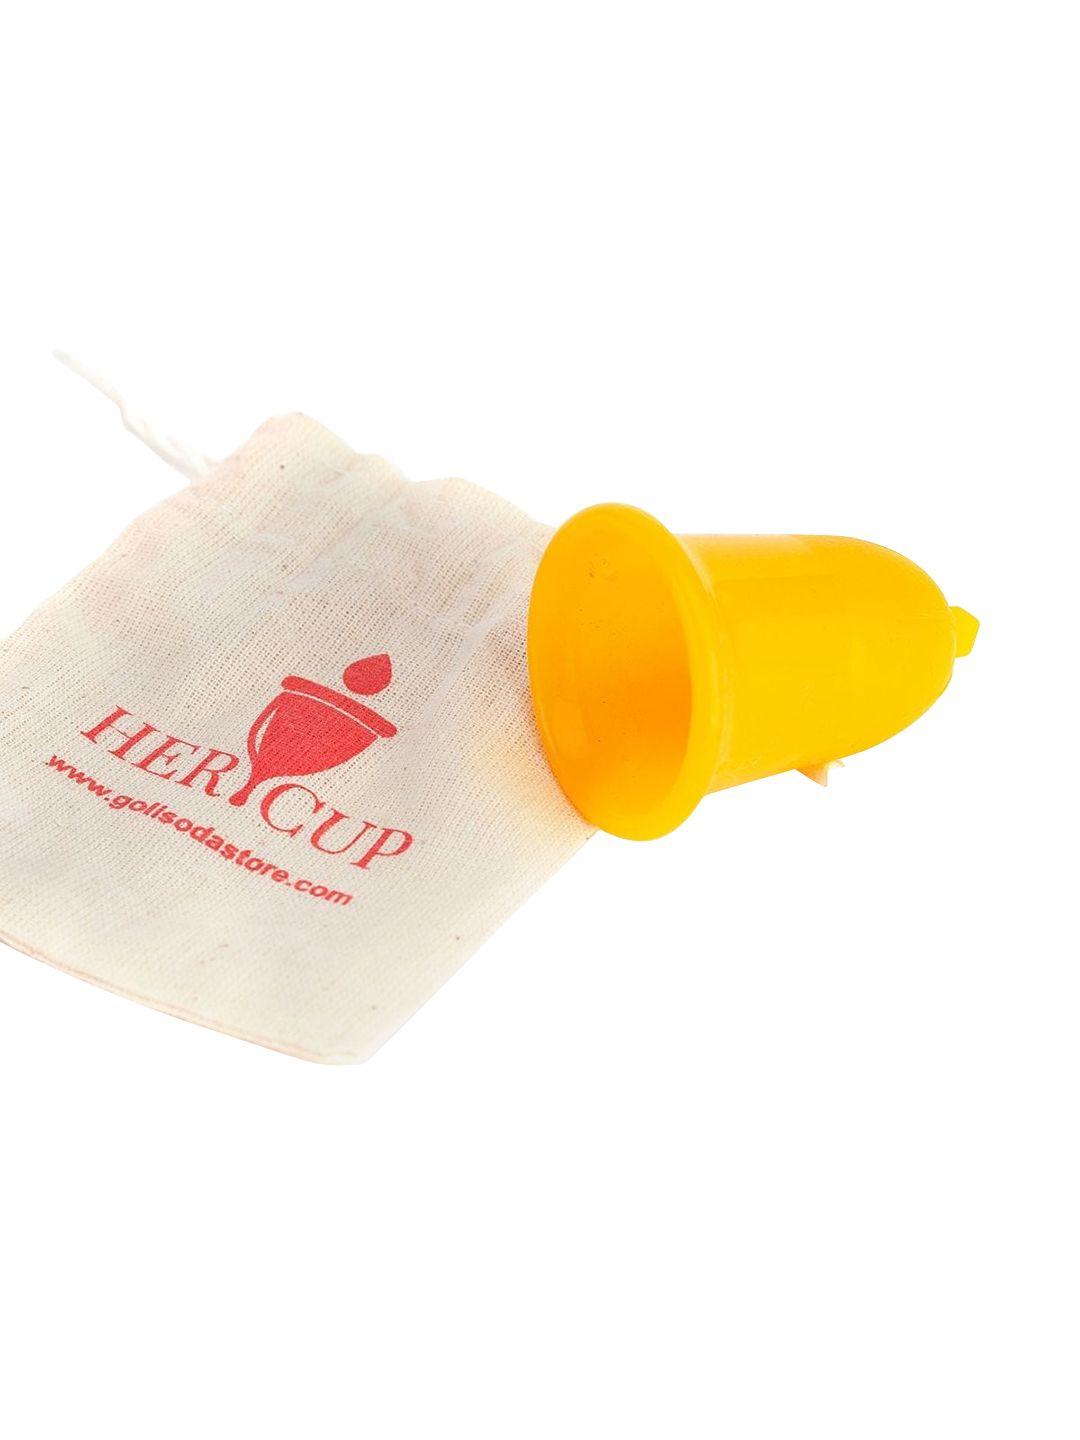 goli-soda-yellow-menstrual-cup